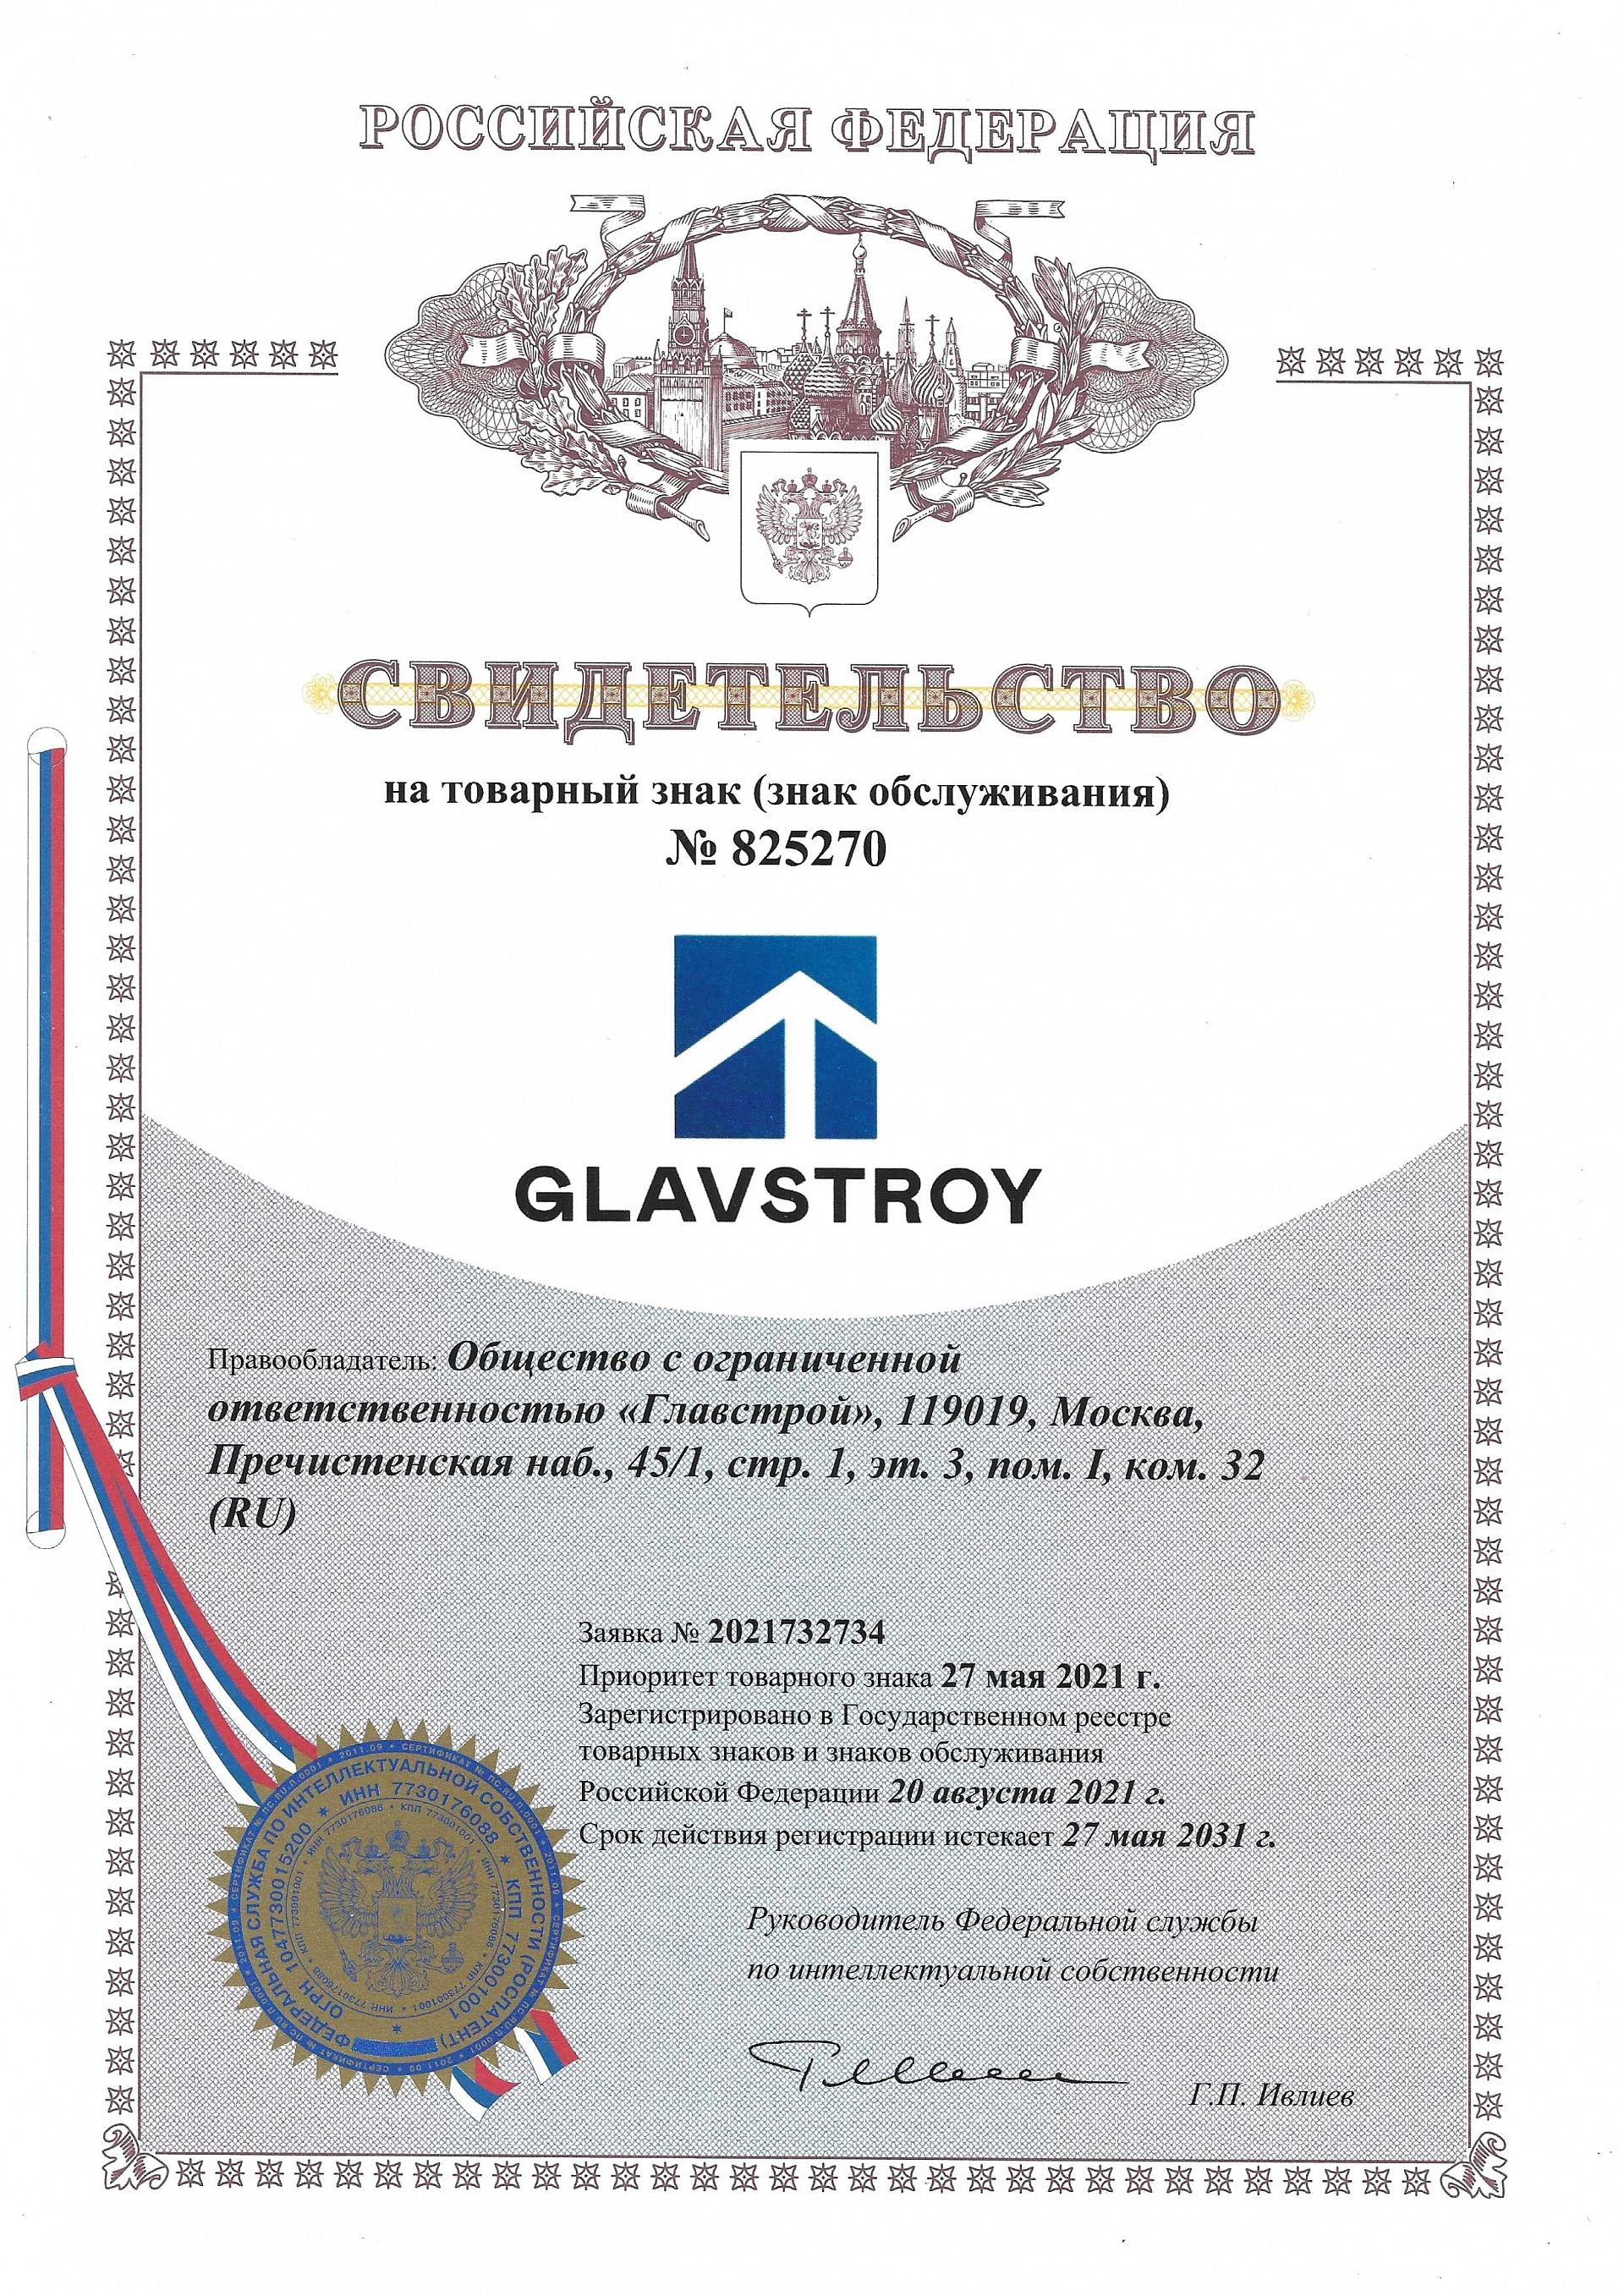 Товарный знак № 825270 – Glavstroy